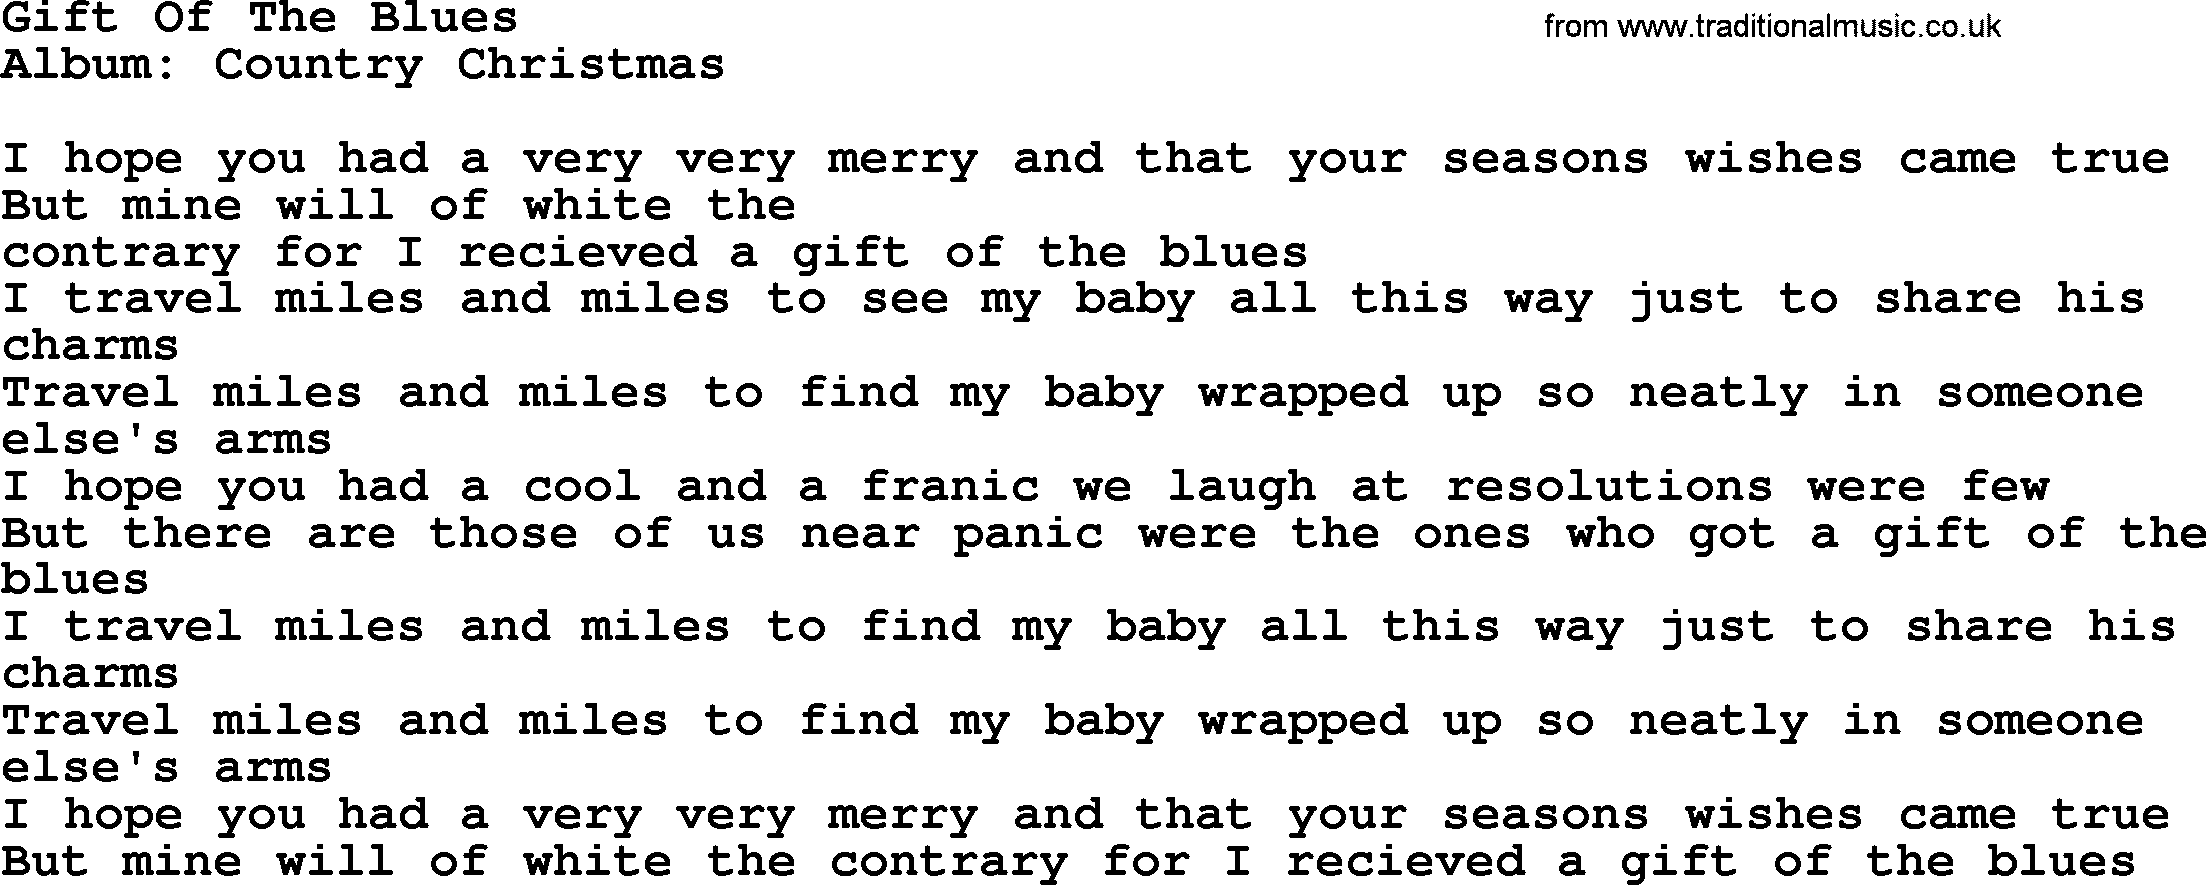 Loretta Lynn song: Gift Of The Blues lyrics